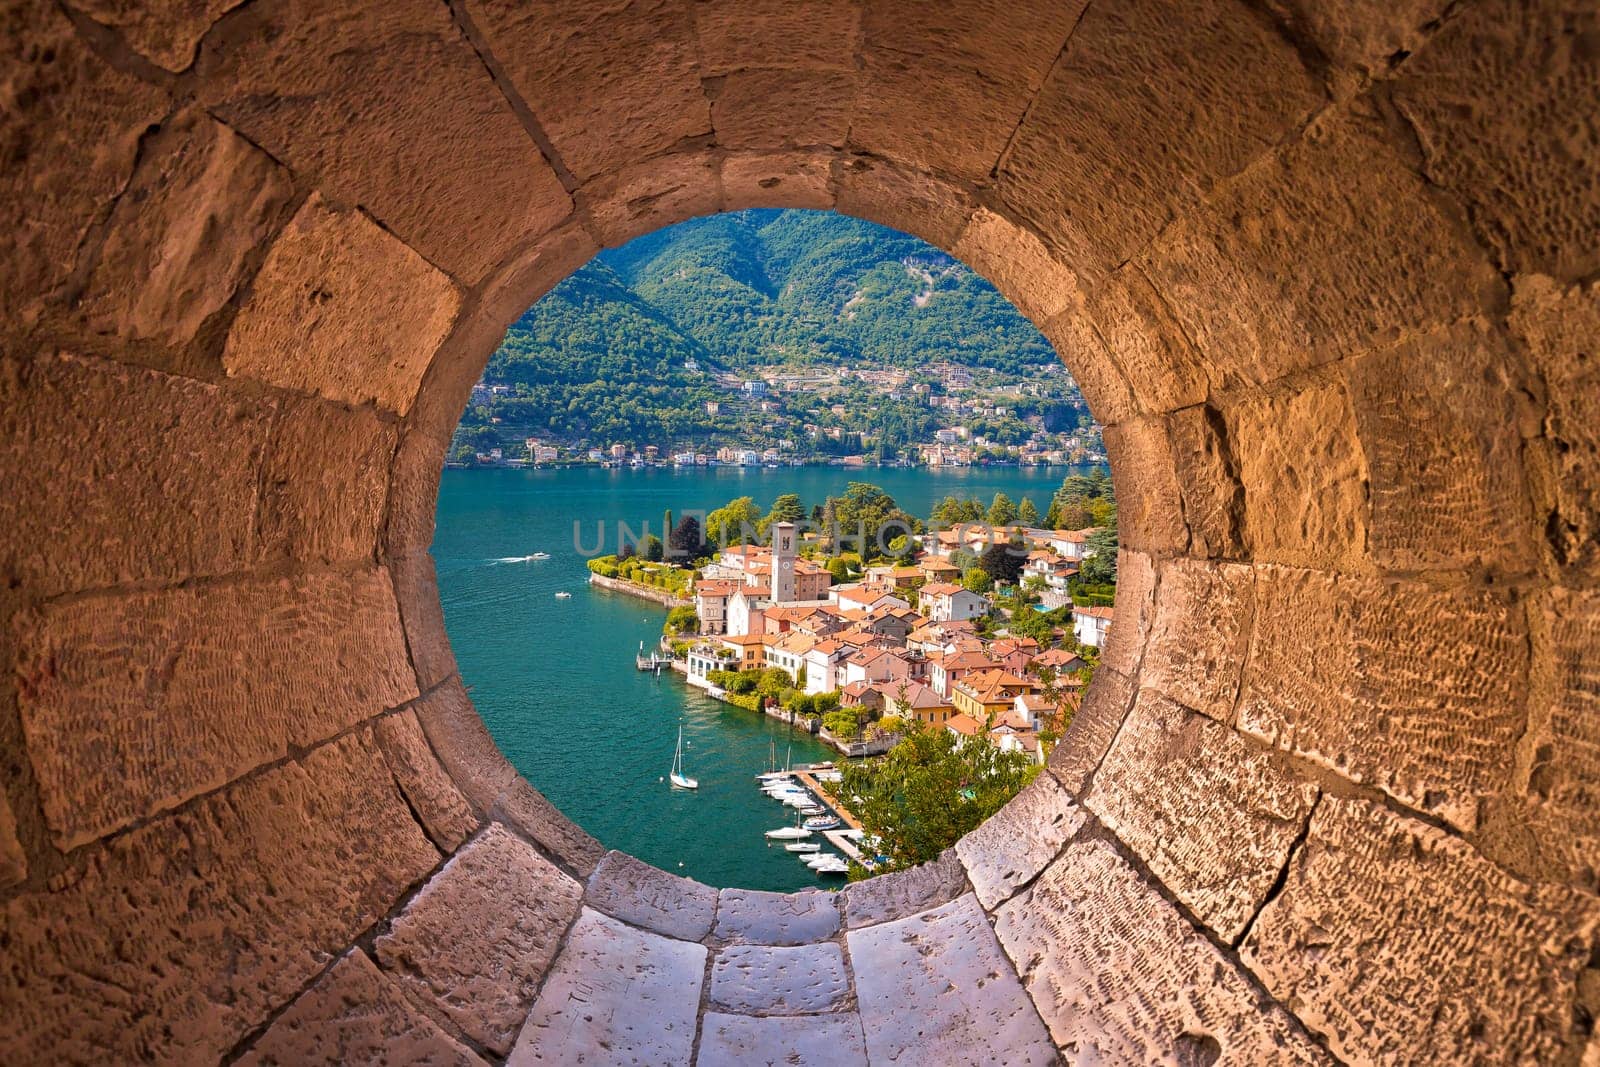 Idyllic town of Torno on Como lake view through stone window, Lombardy region of Italy